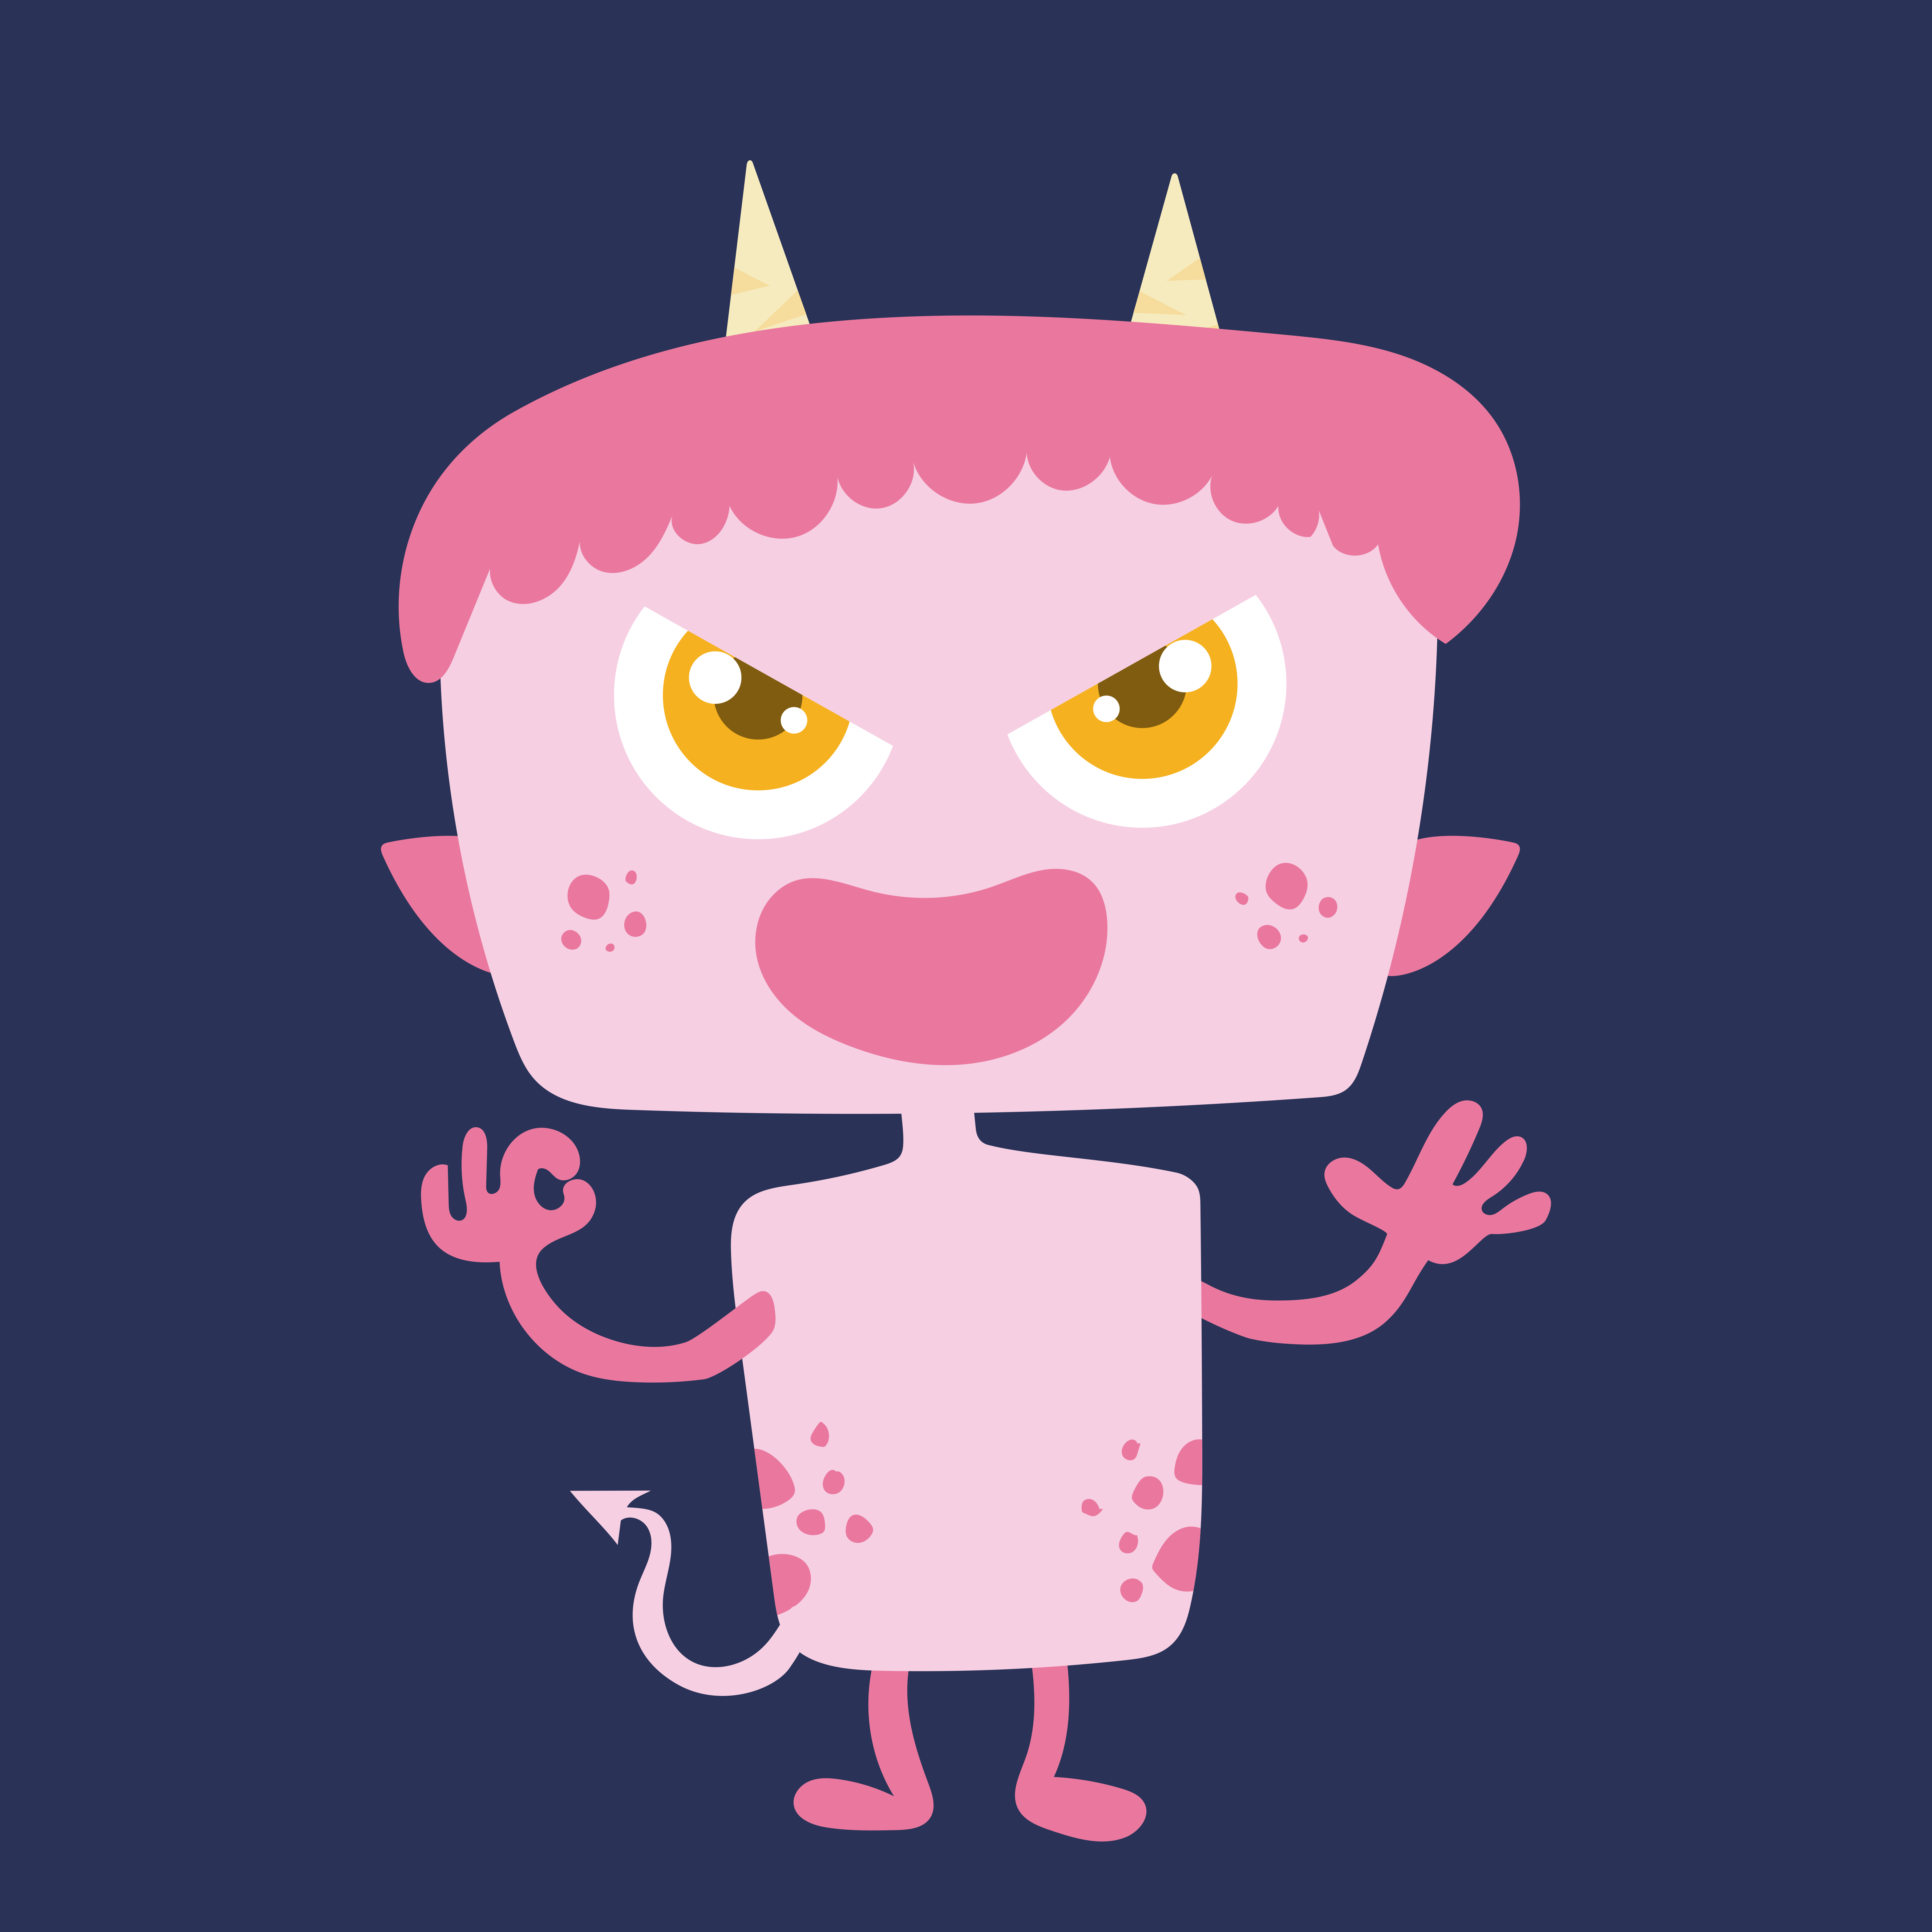 Cute monster cartoon character 009 - Download Free Vector ...